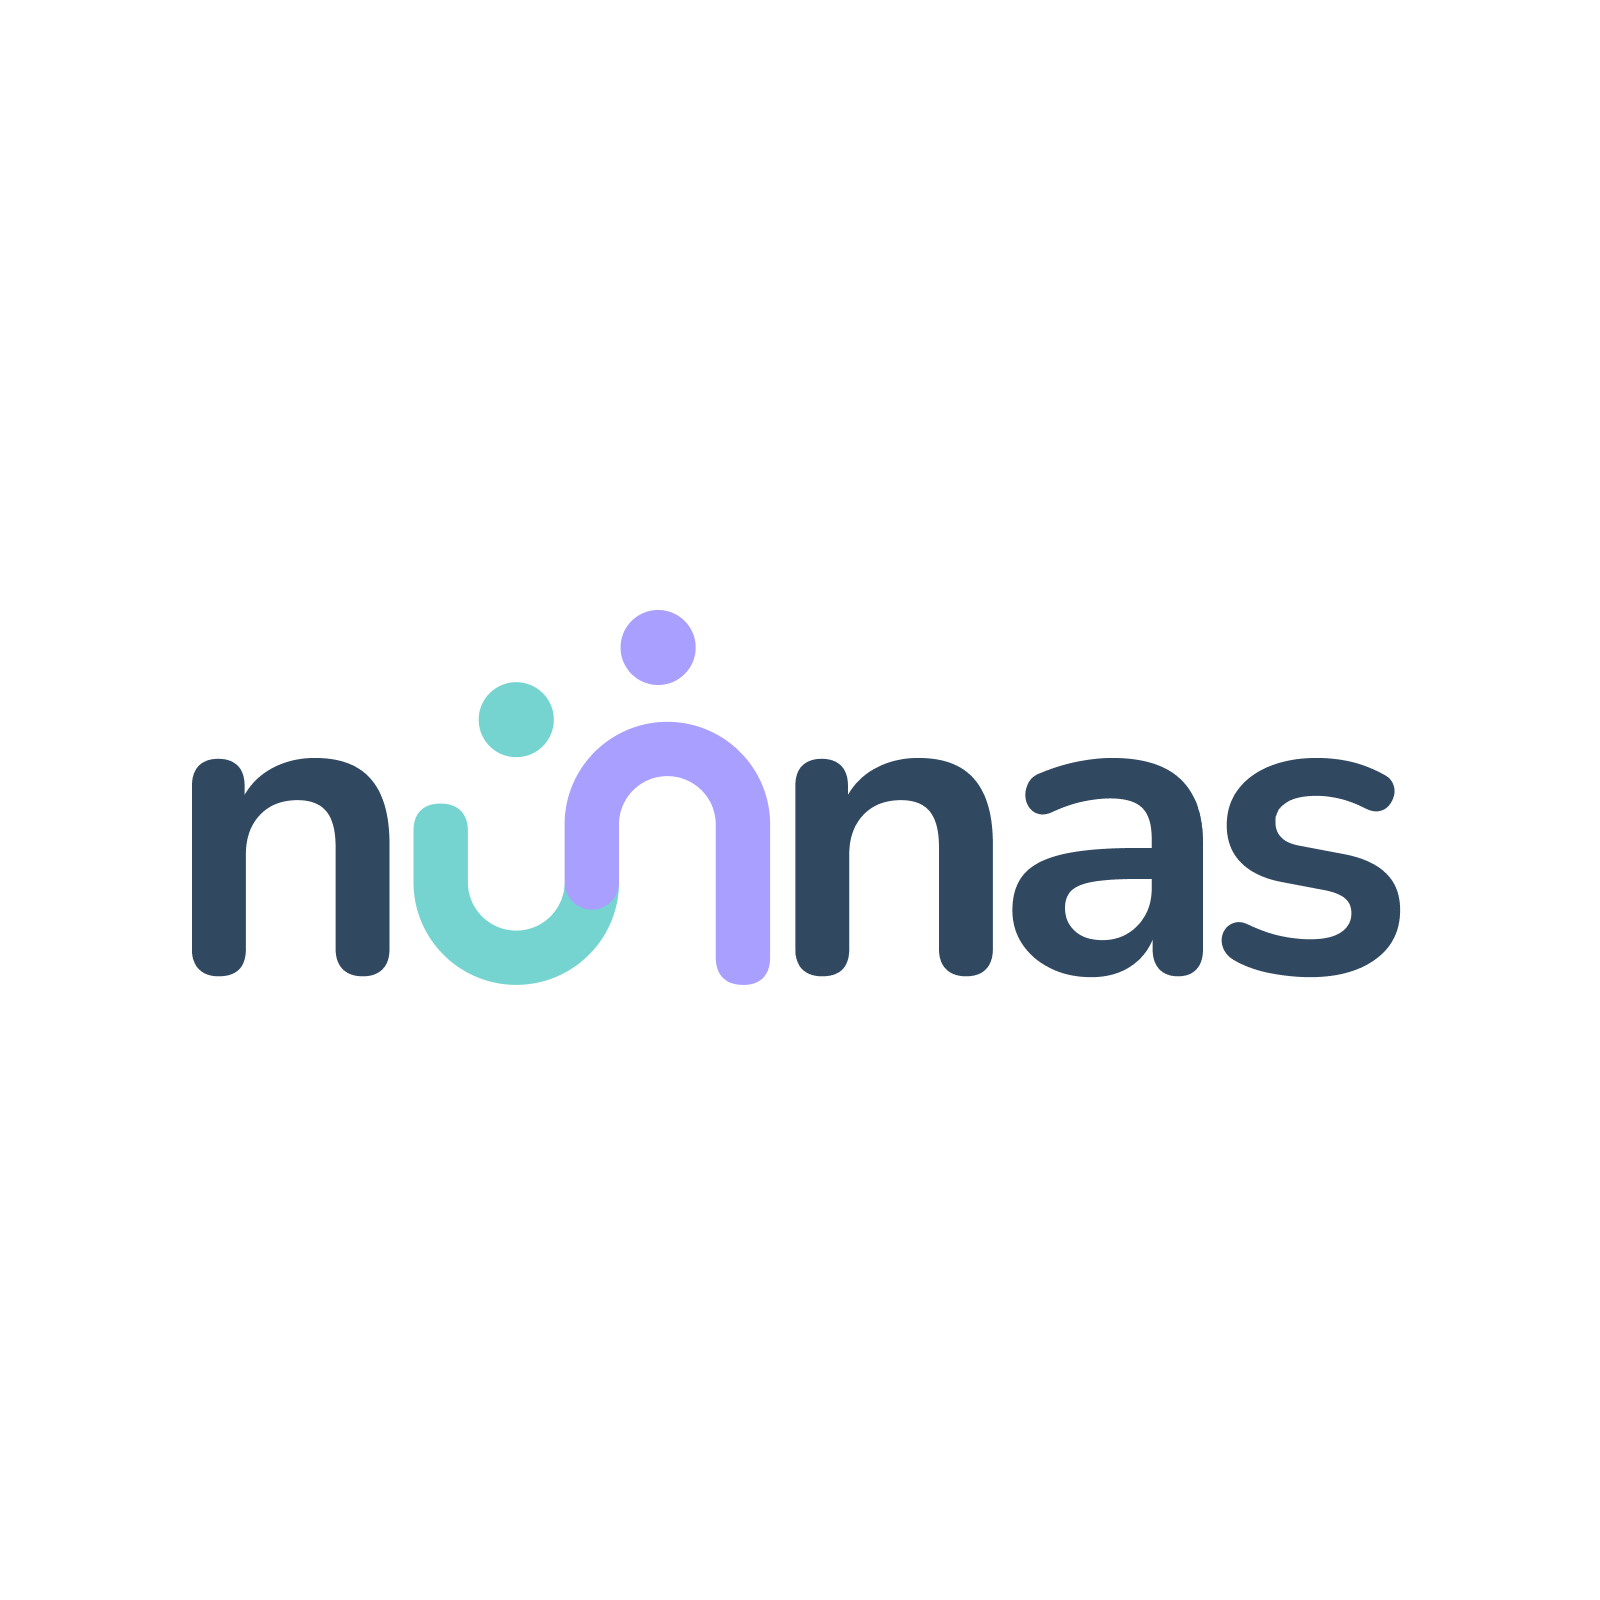 Nunnas Logo.png